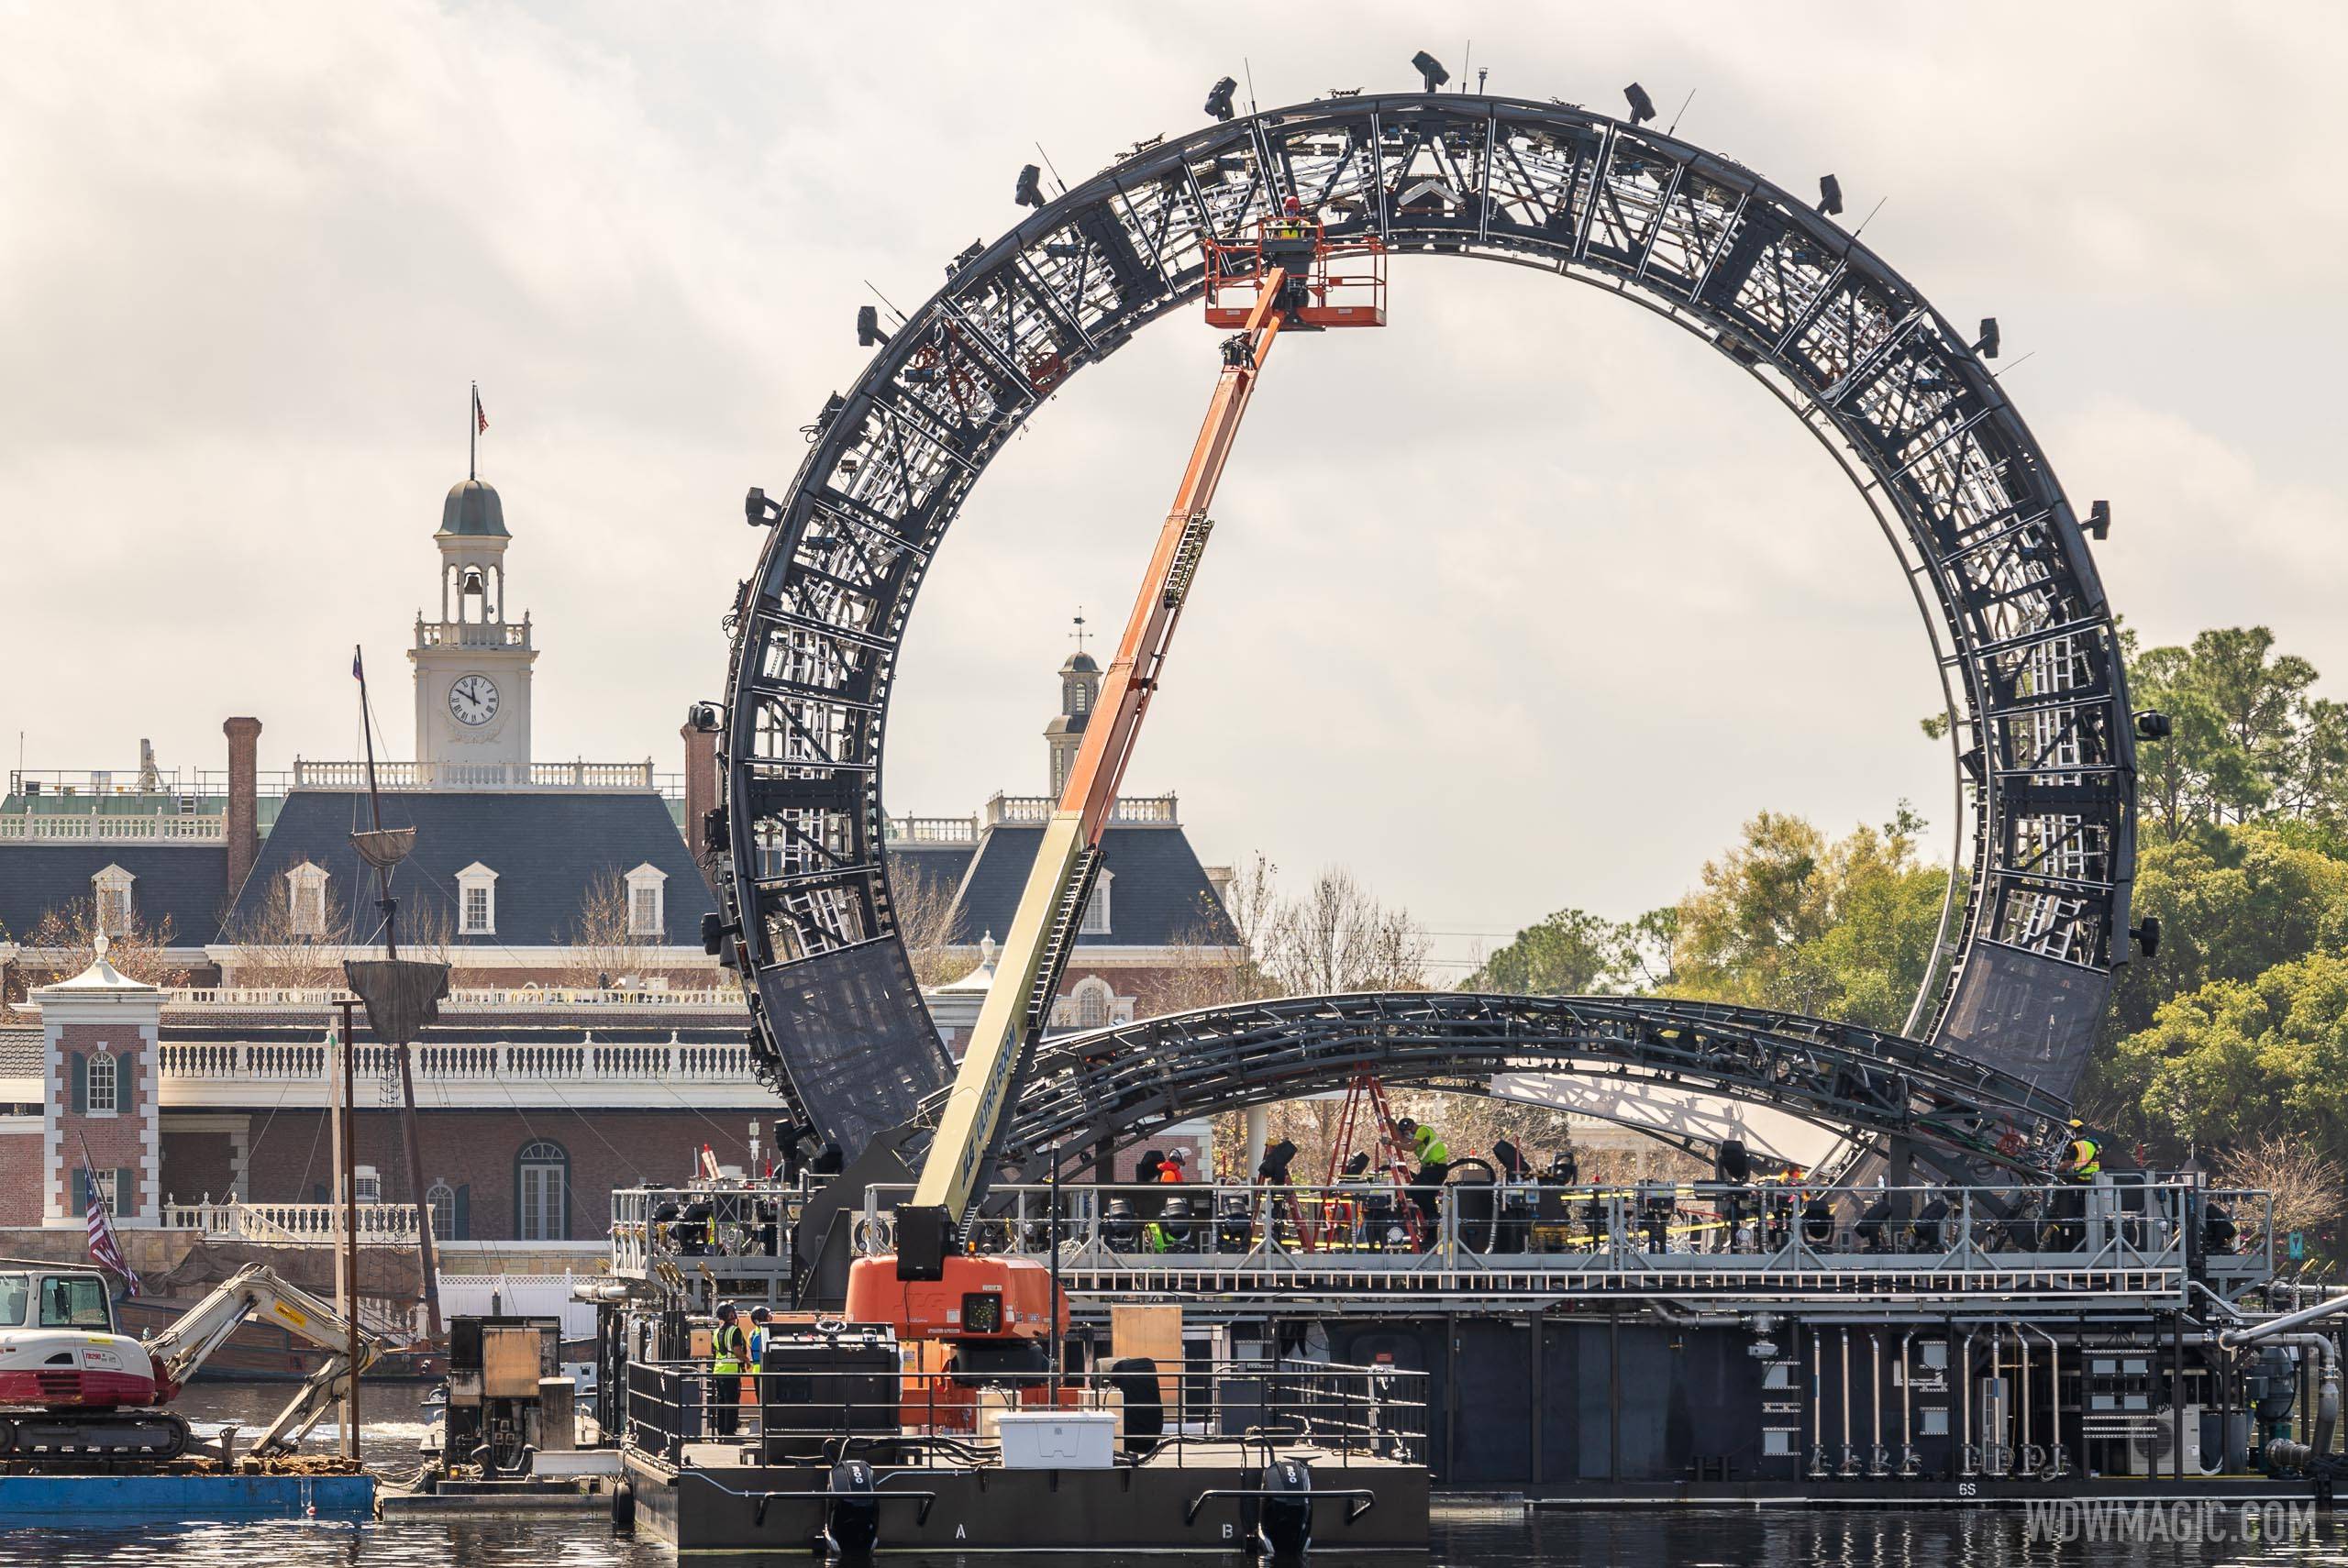 PHOTOS - How crews reach the top of the Harmonious icon barge